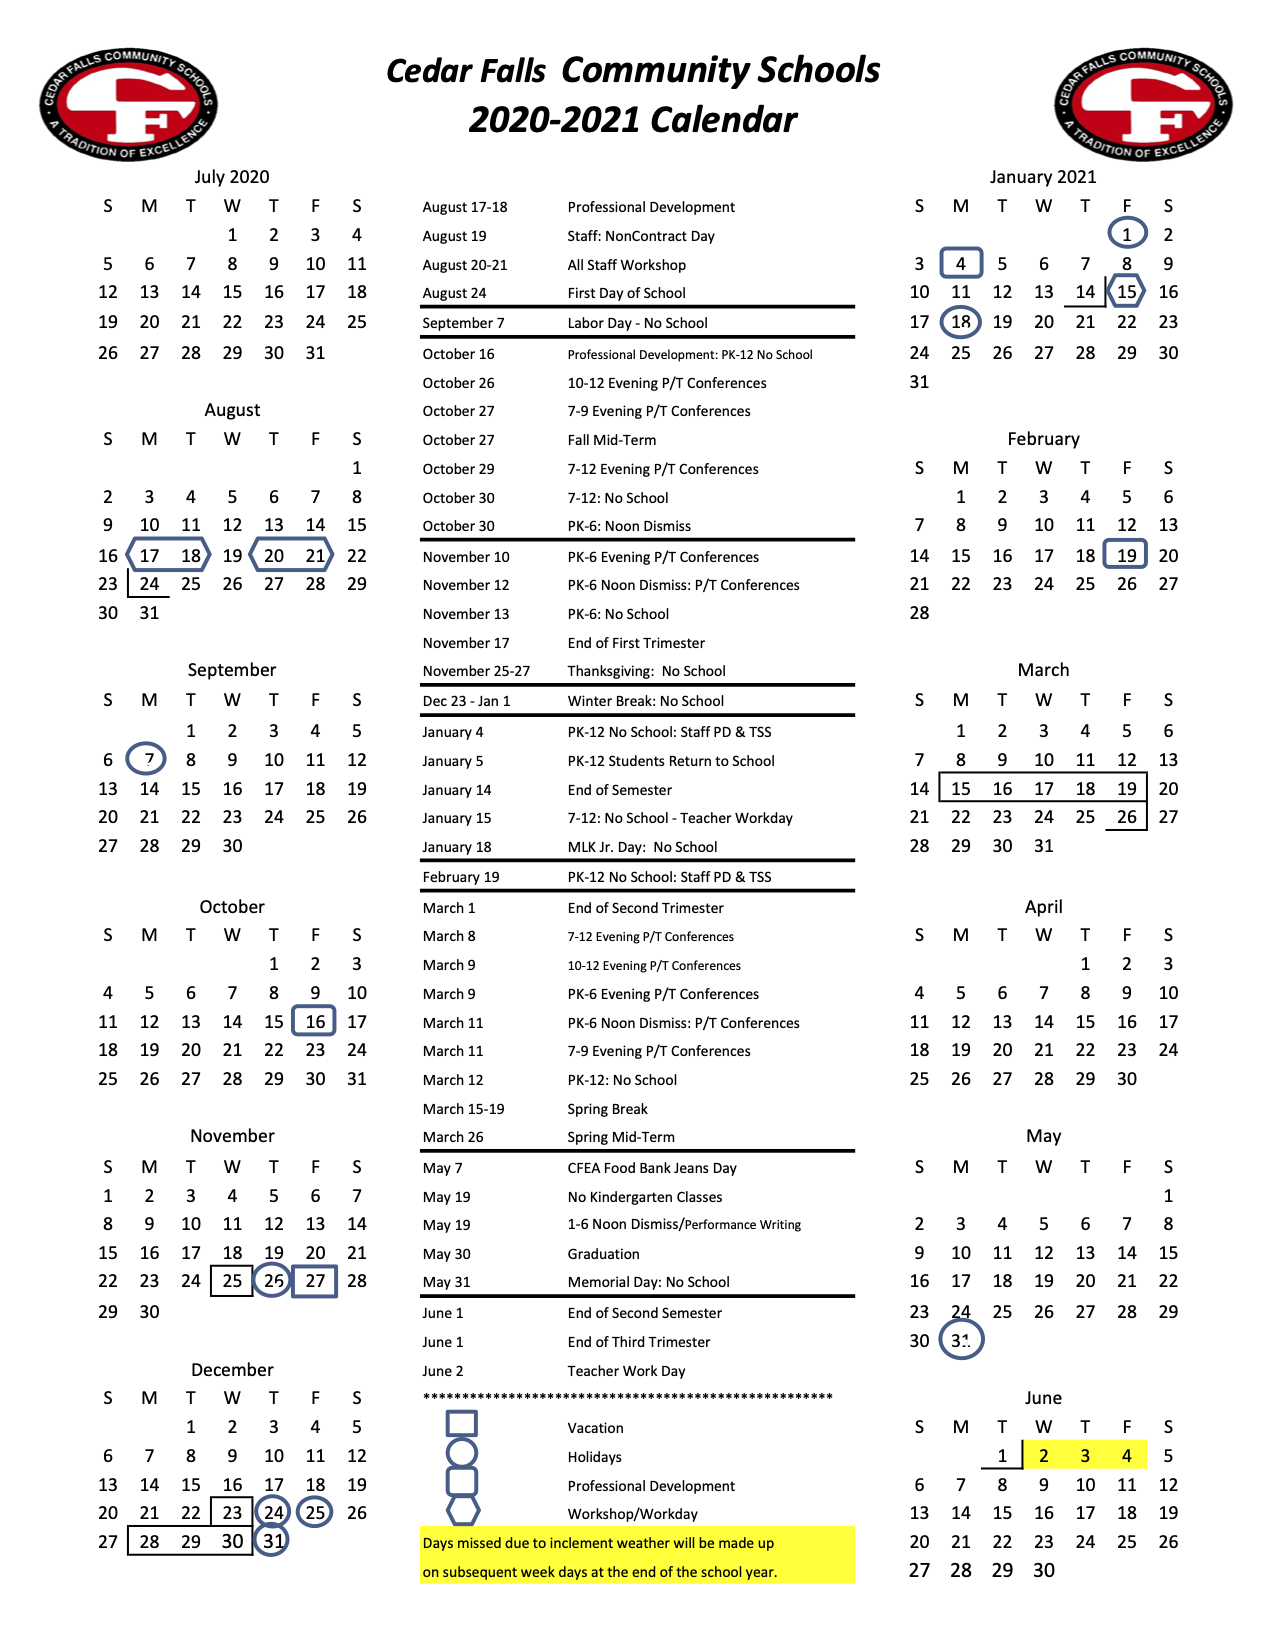 Cedar Falls Schools Calendar 2021 2022 Calendar Page